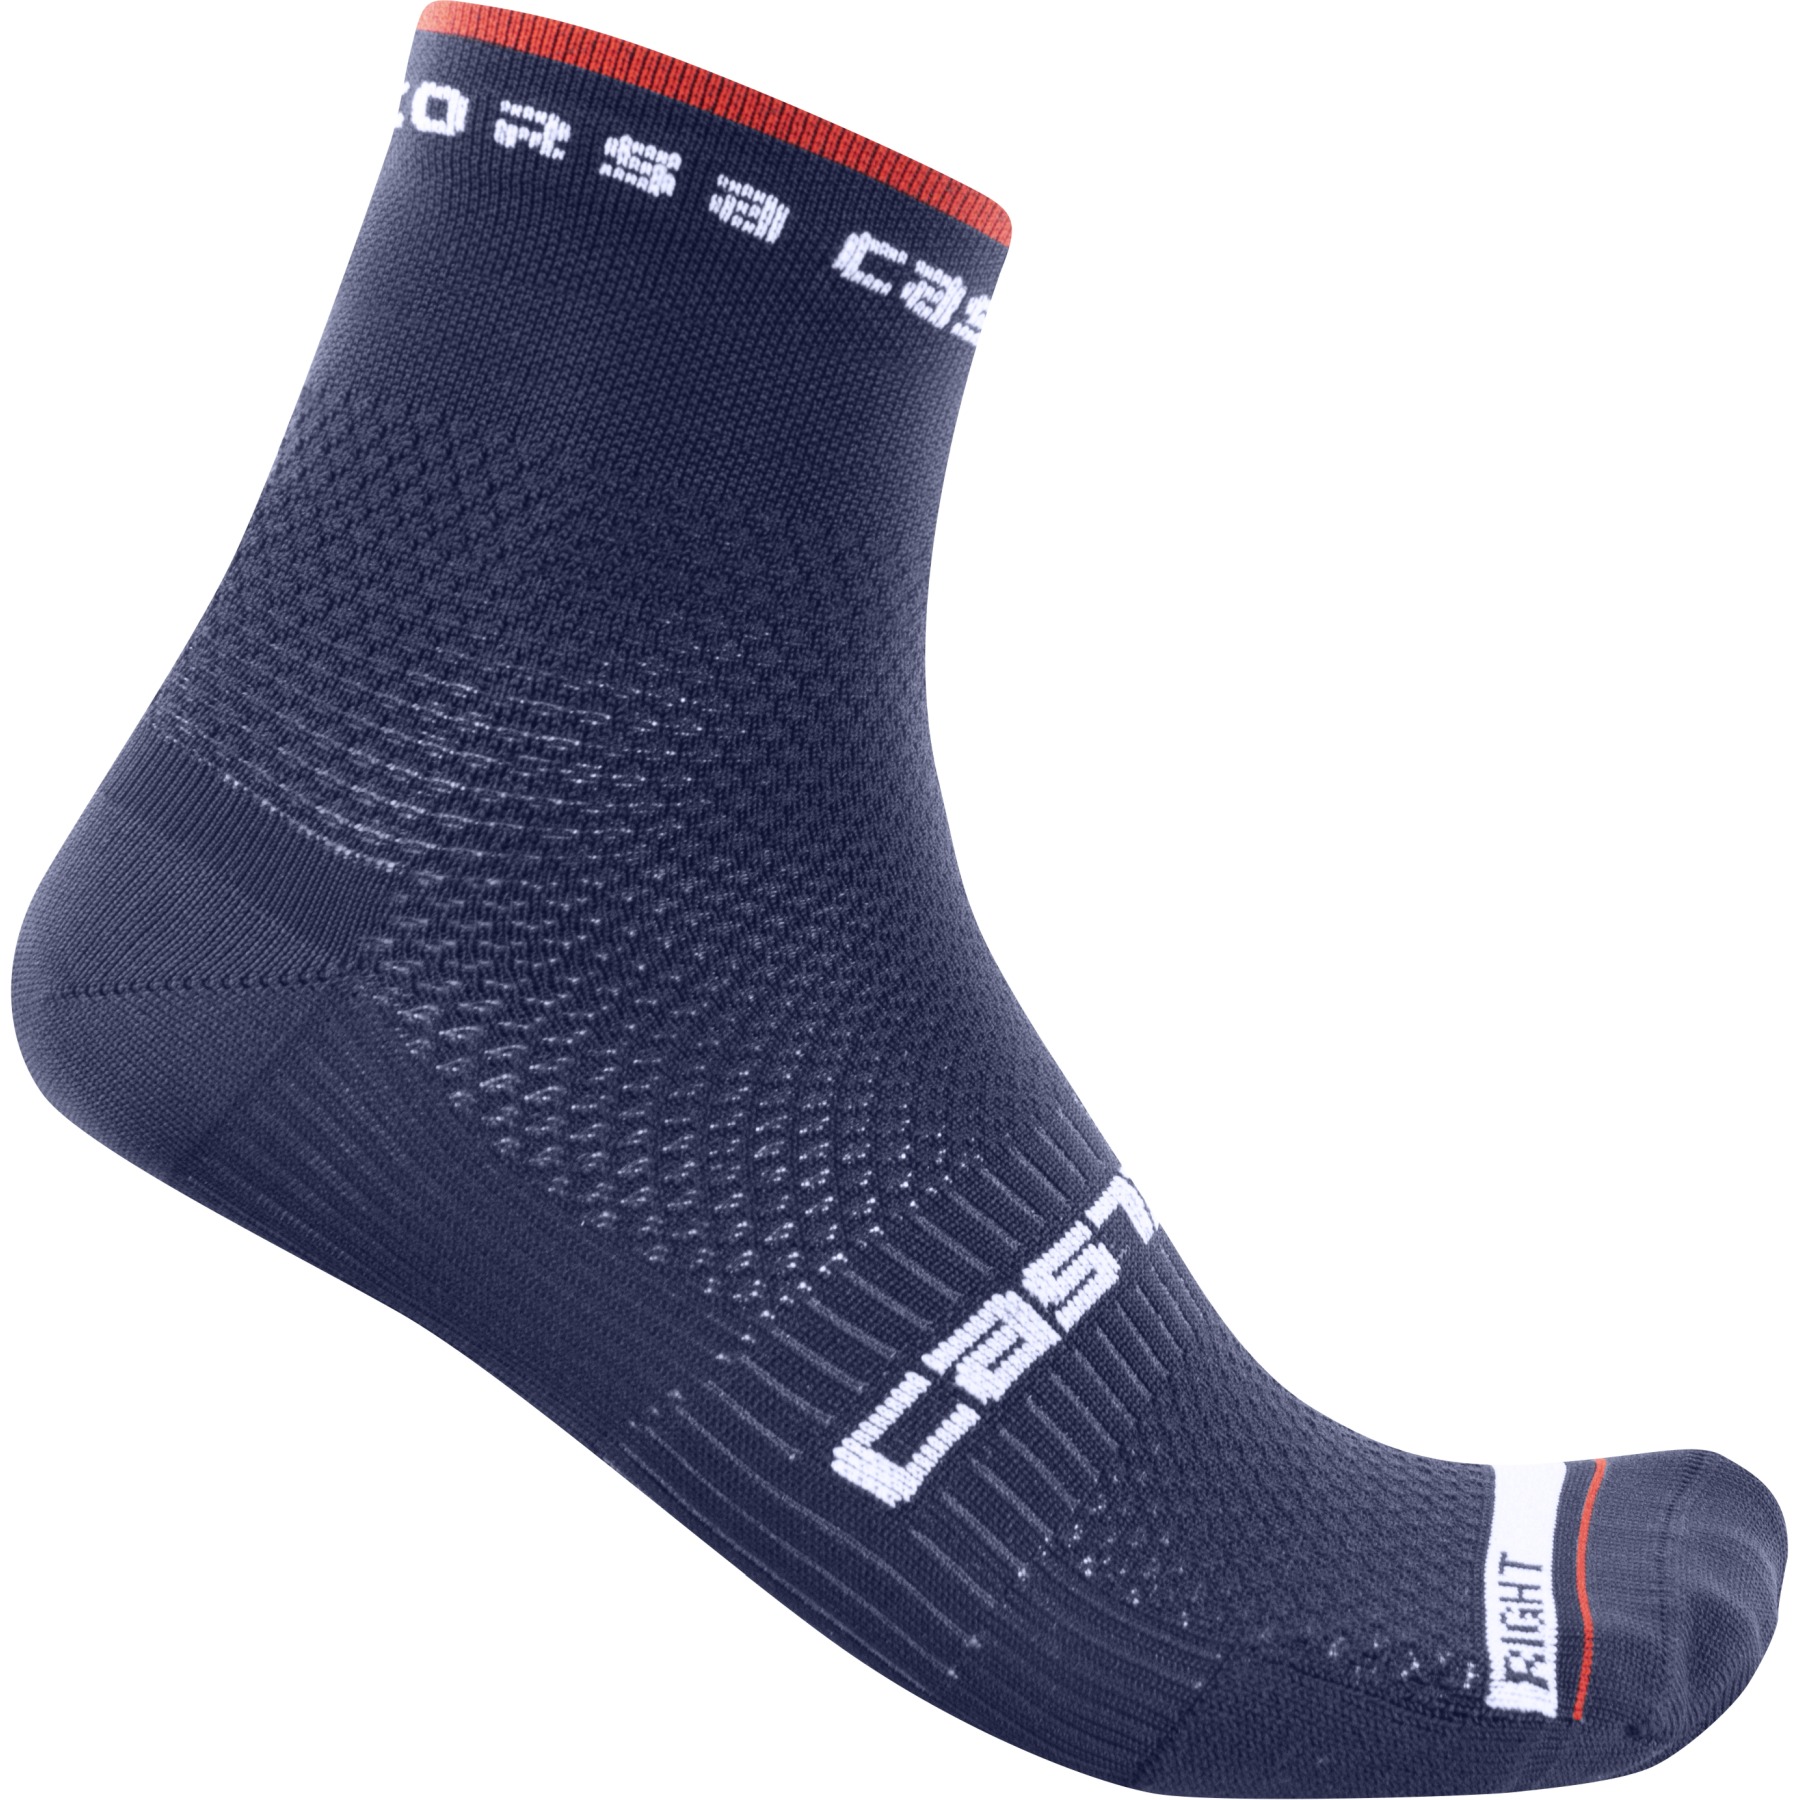 Productfoto van Castelli Rosso Corsa Pro 9 Socks - belgian blue 424